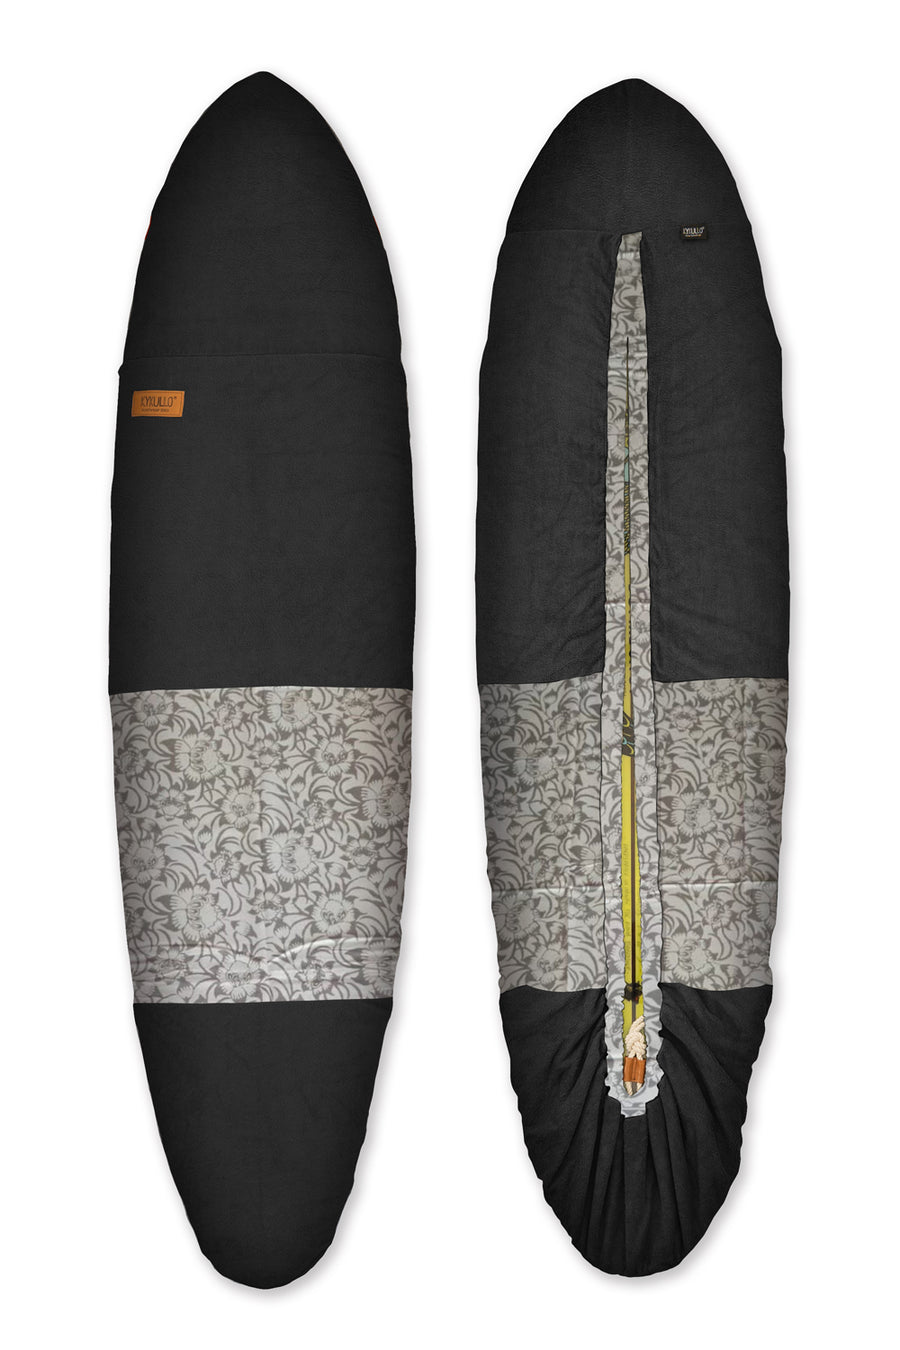 SURFWRAP 7'4 - BLACK x GREY